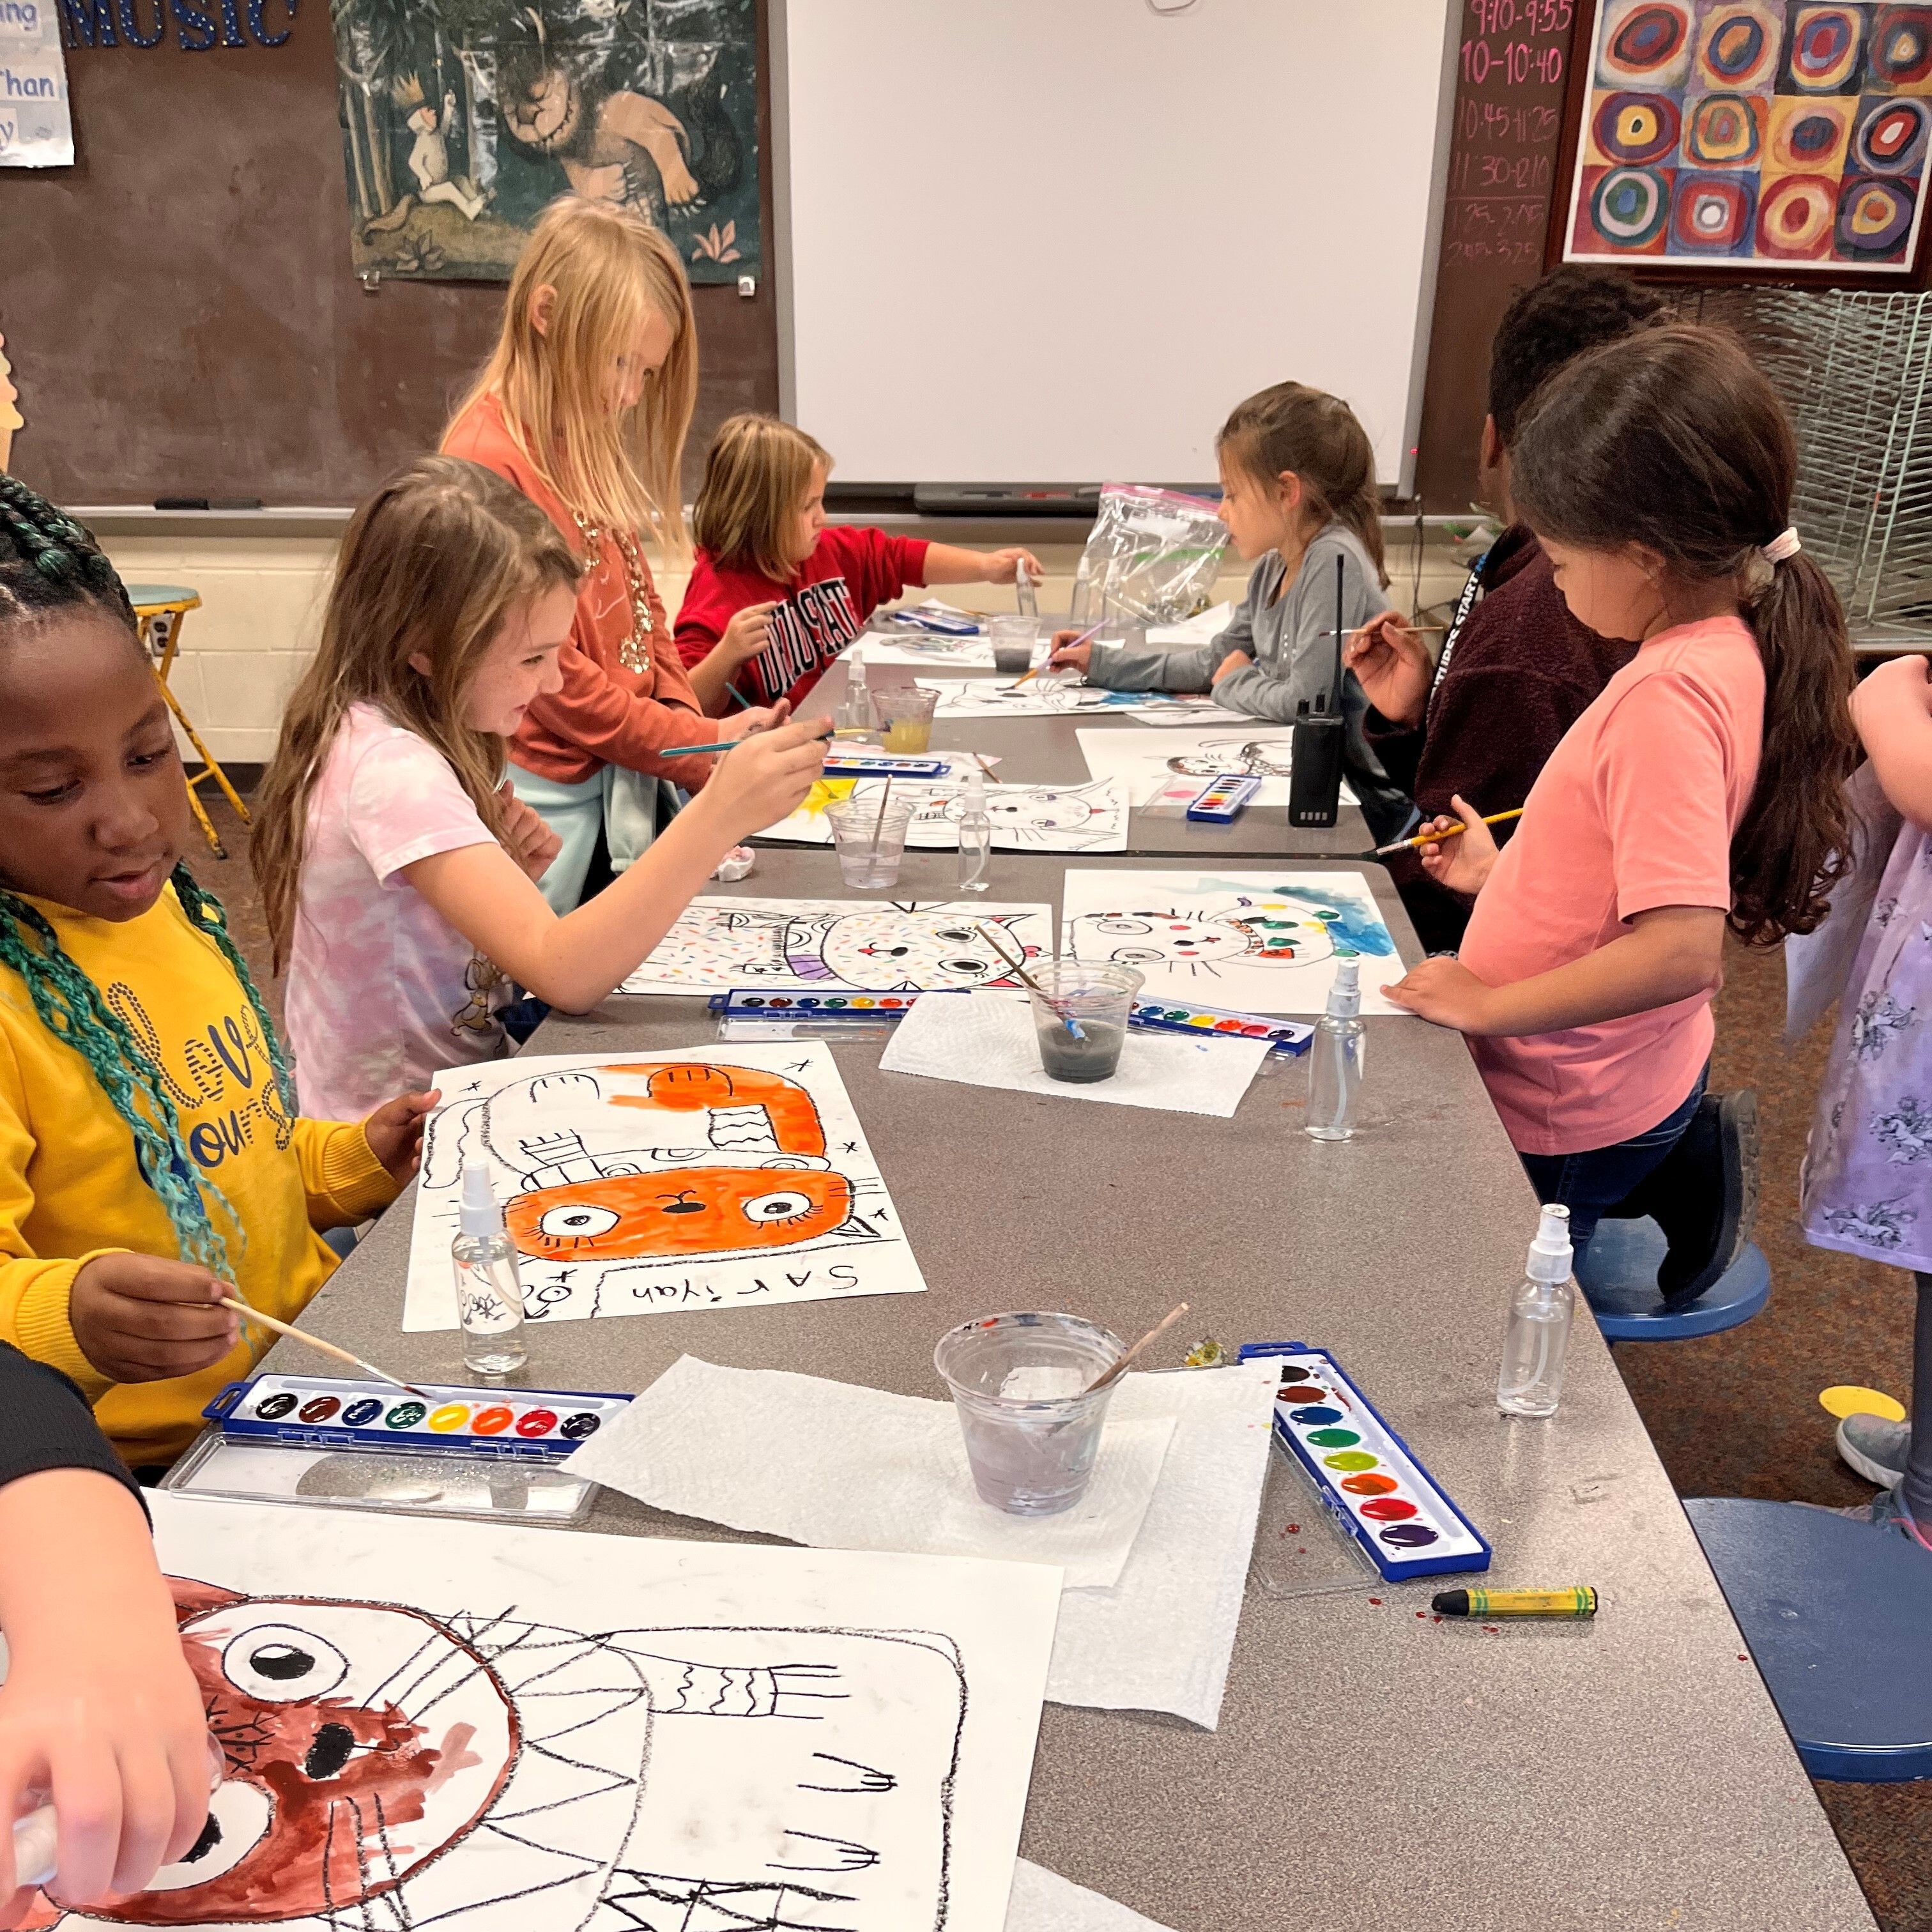 Students creating artwork